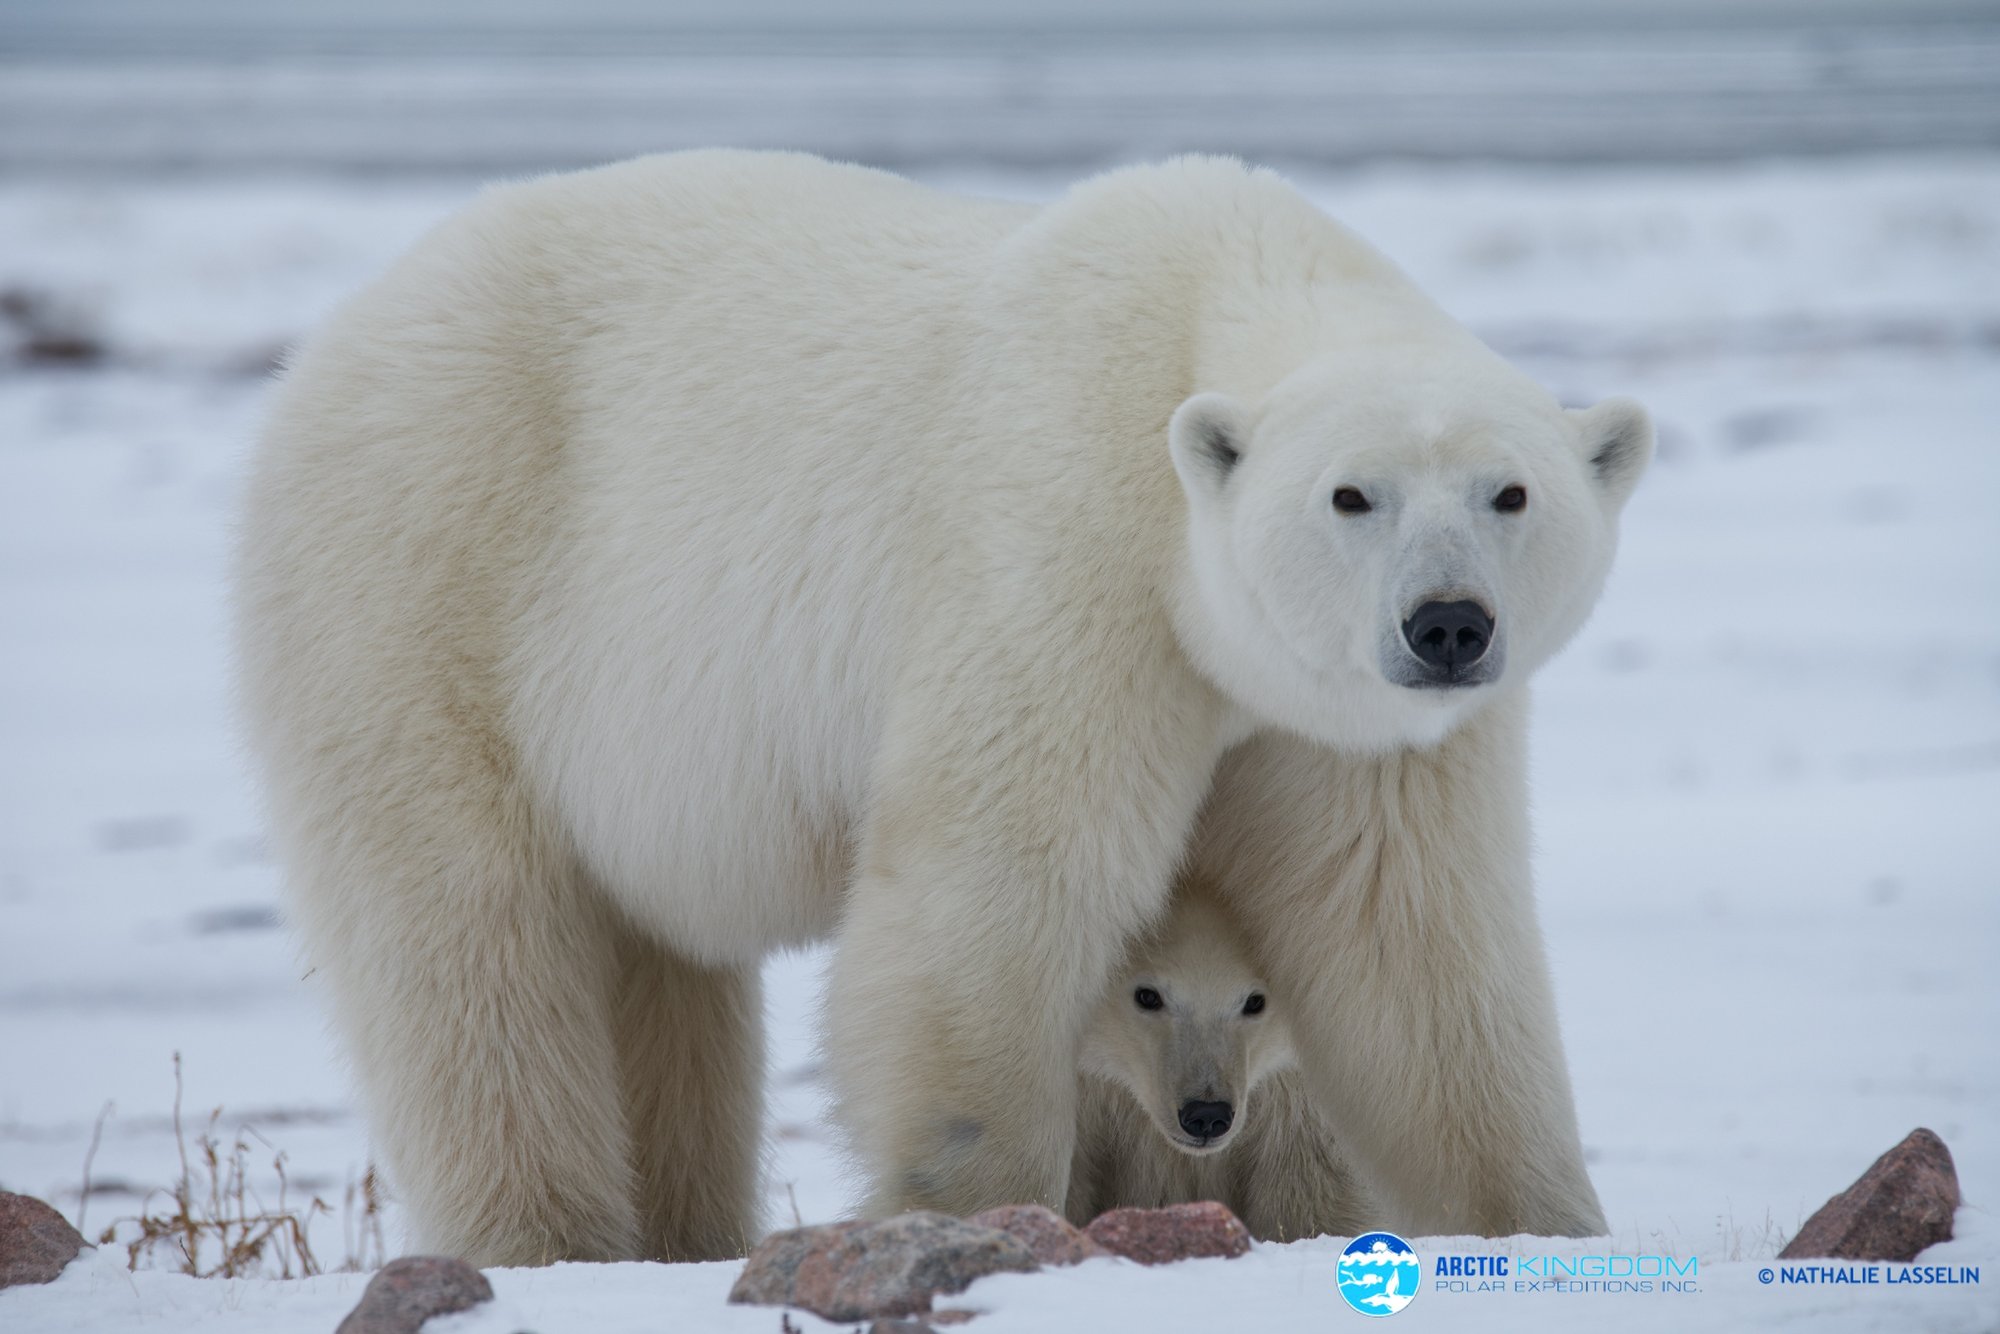 Arctic Kingdom NATHALIE LASSALIN_mother with cub under_polar-bear-16-1-2